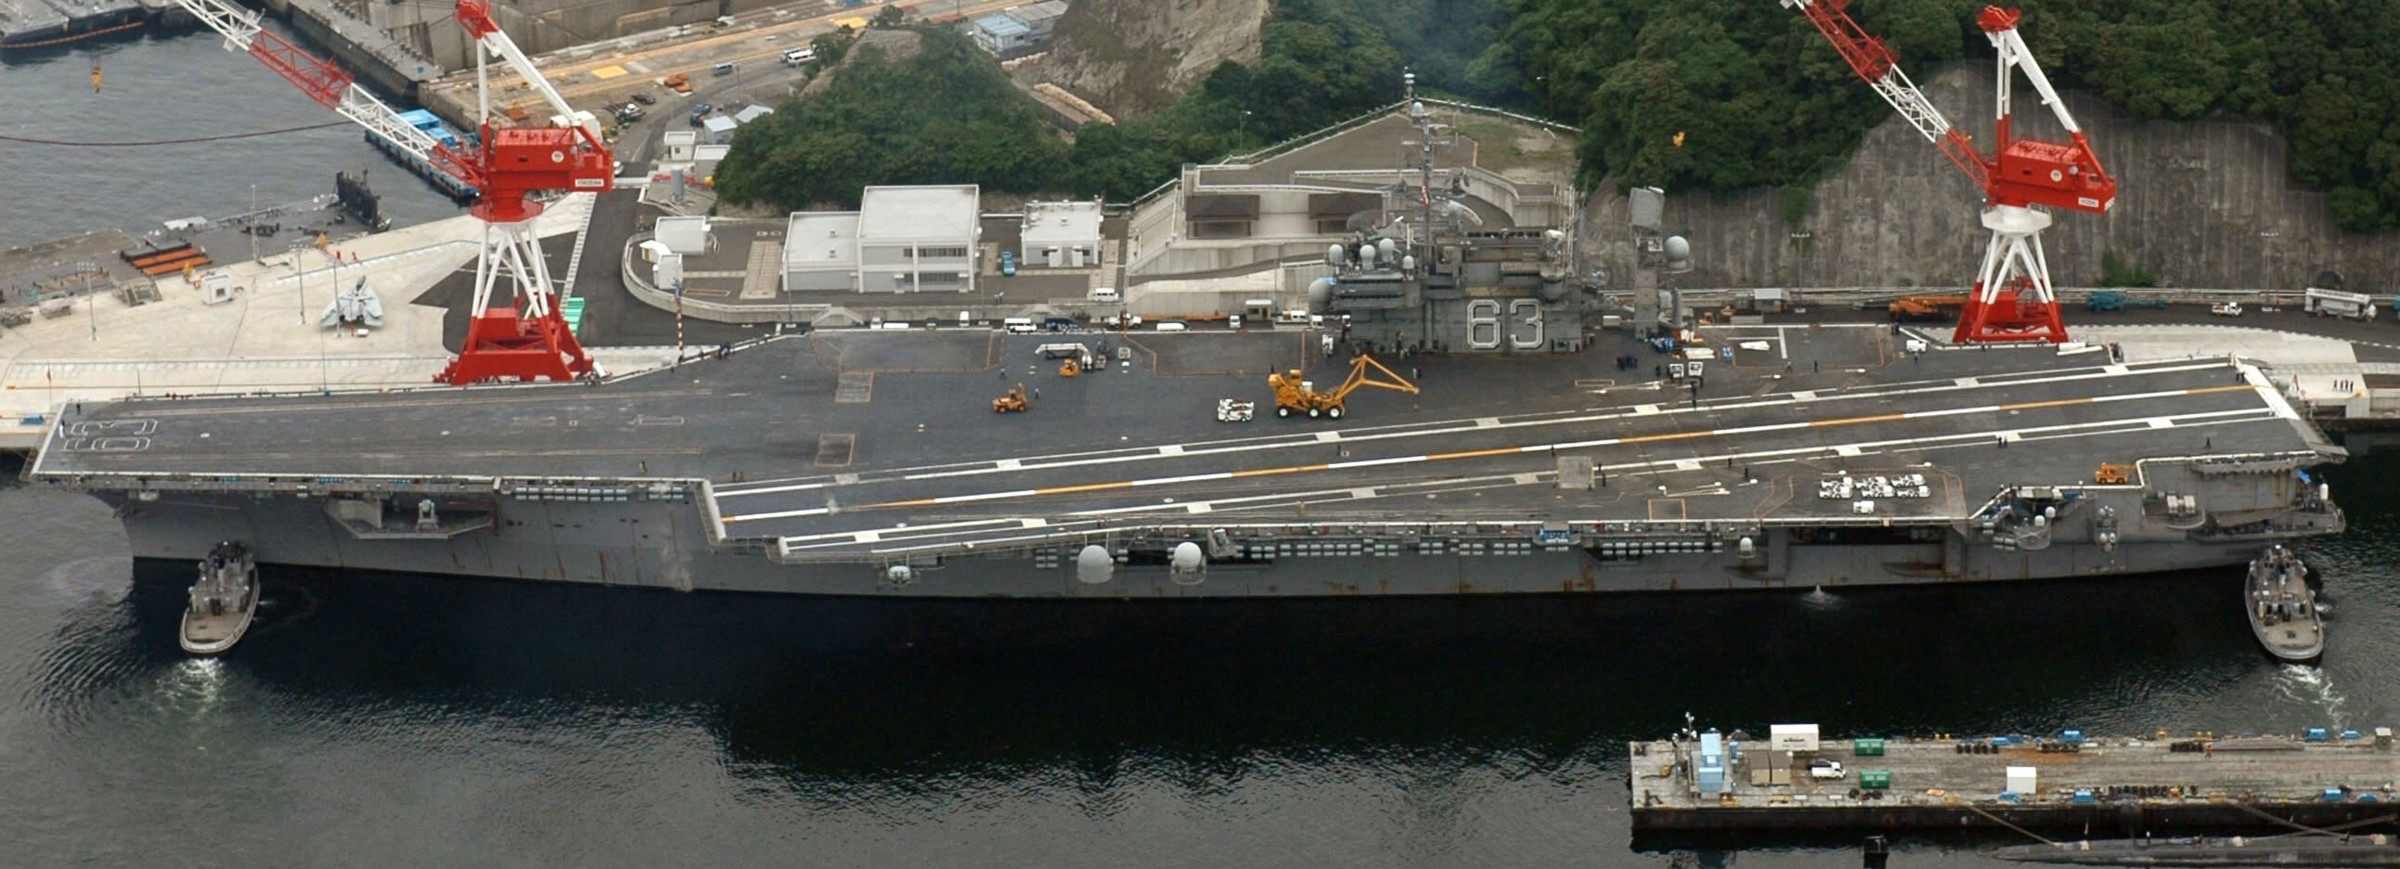 cv-63 uss kitty hawk aircraft carrier us navy fleact yokosuka japan